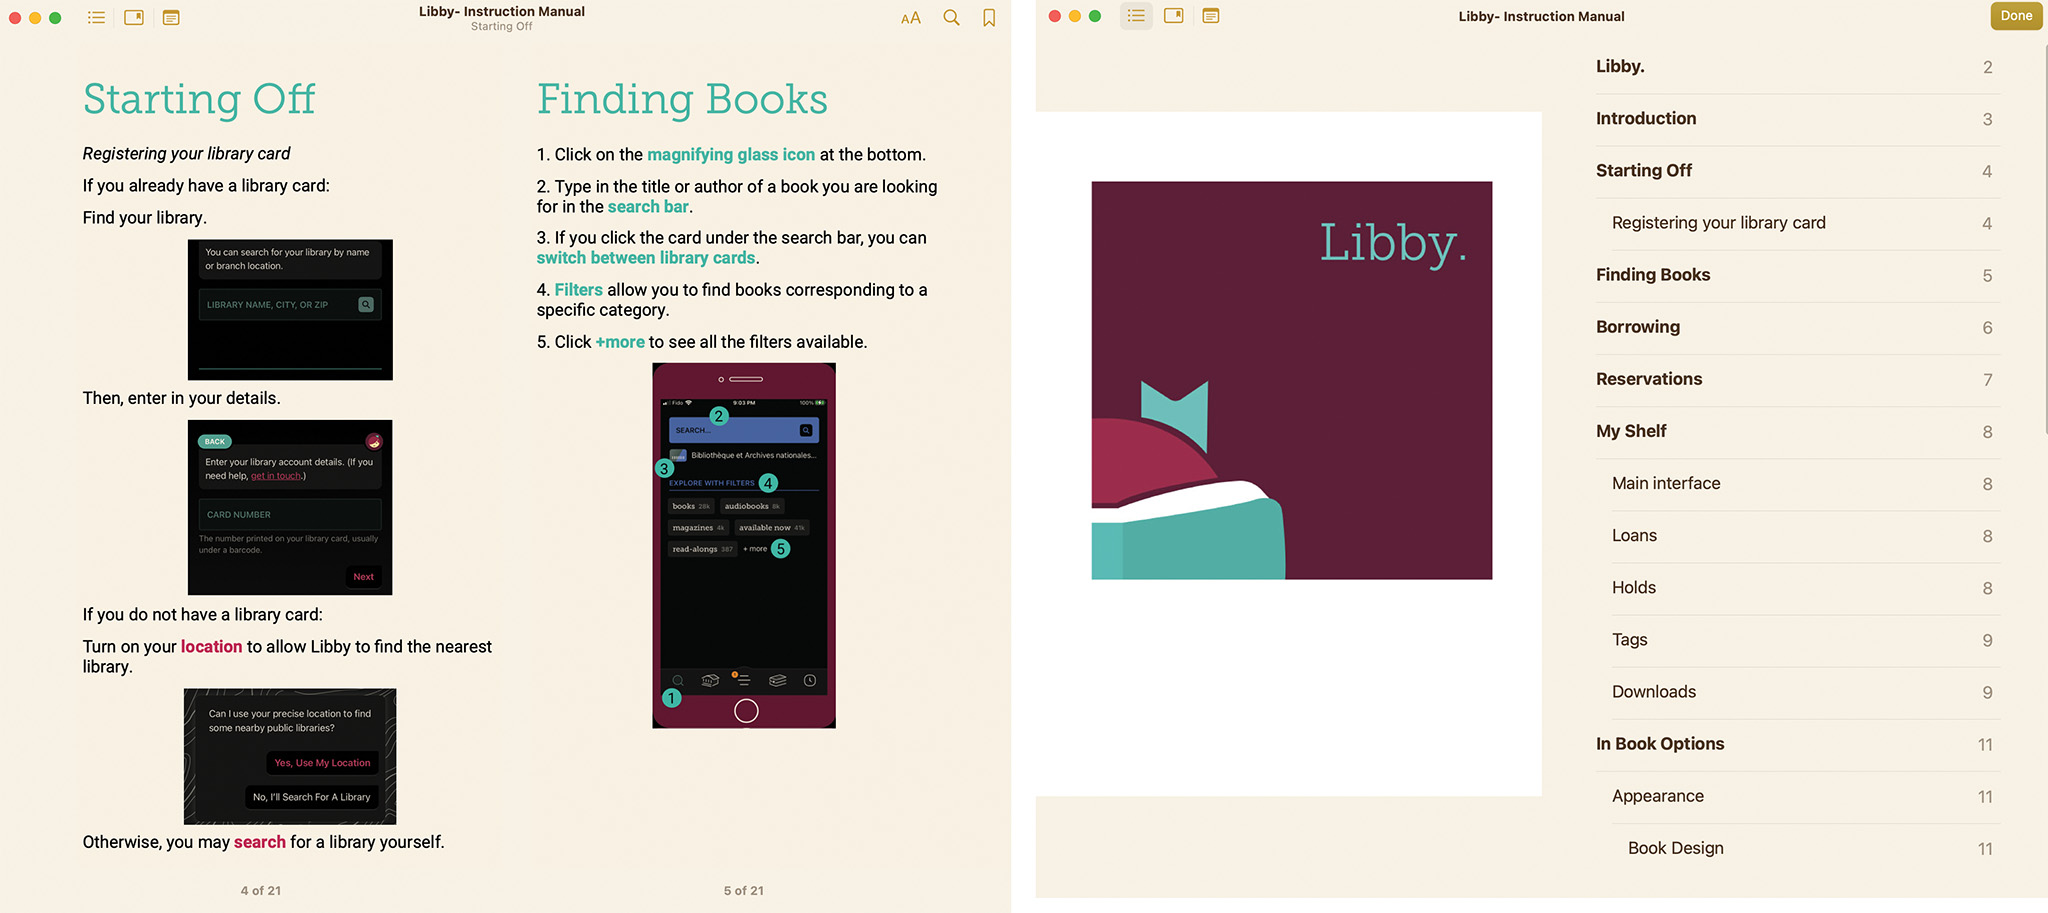 Ebook of an instruction manual for Libby, an app.